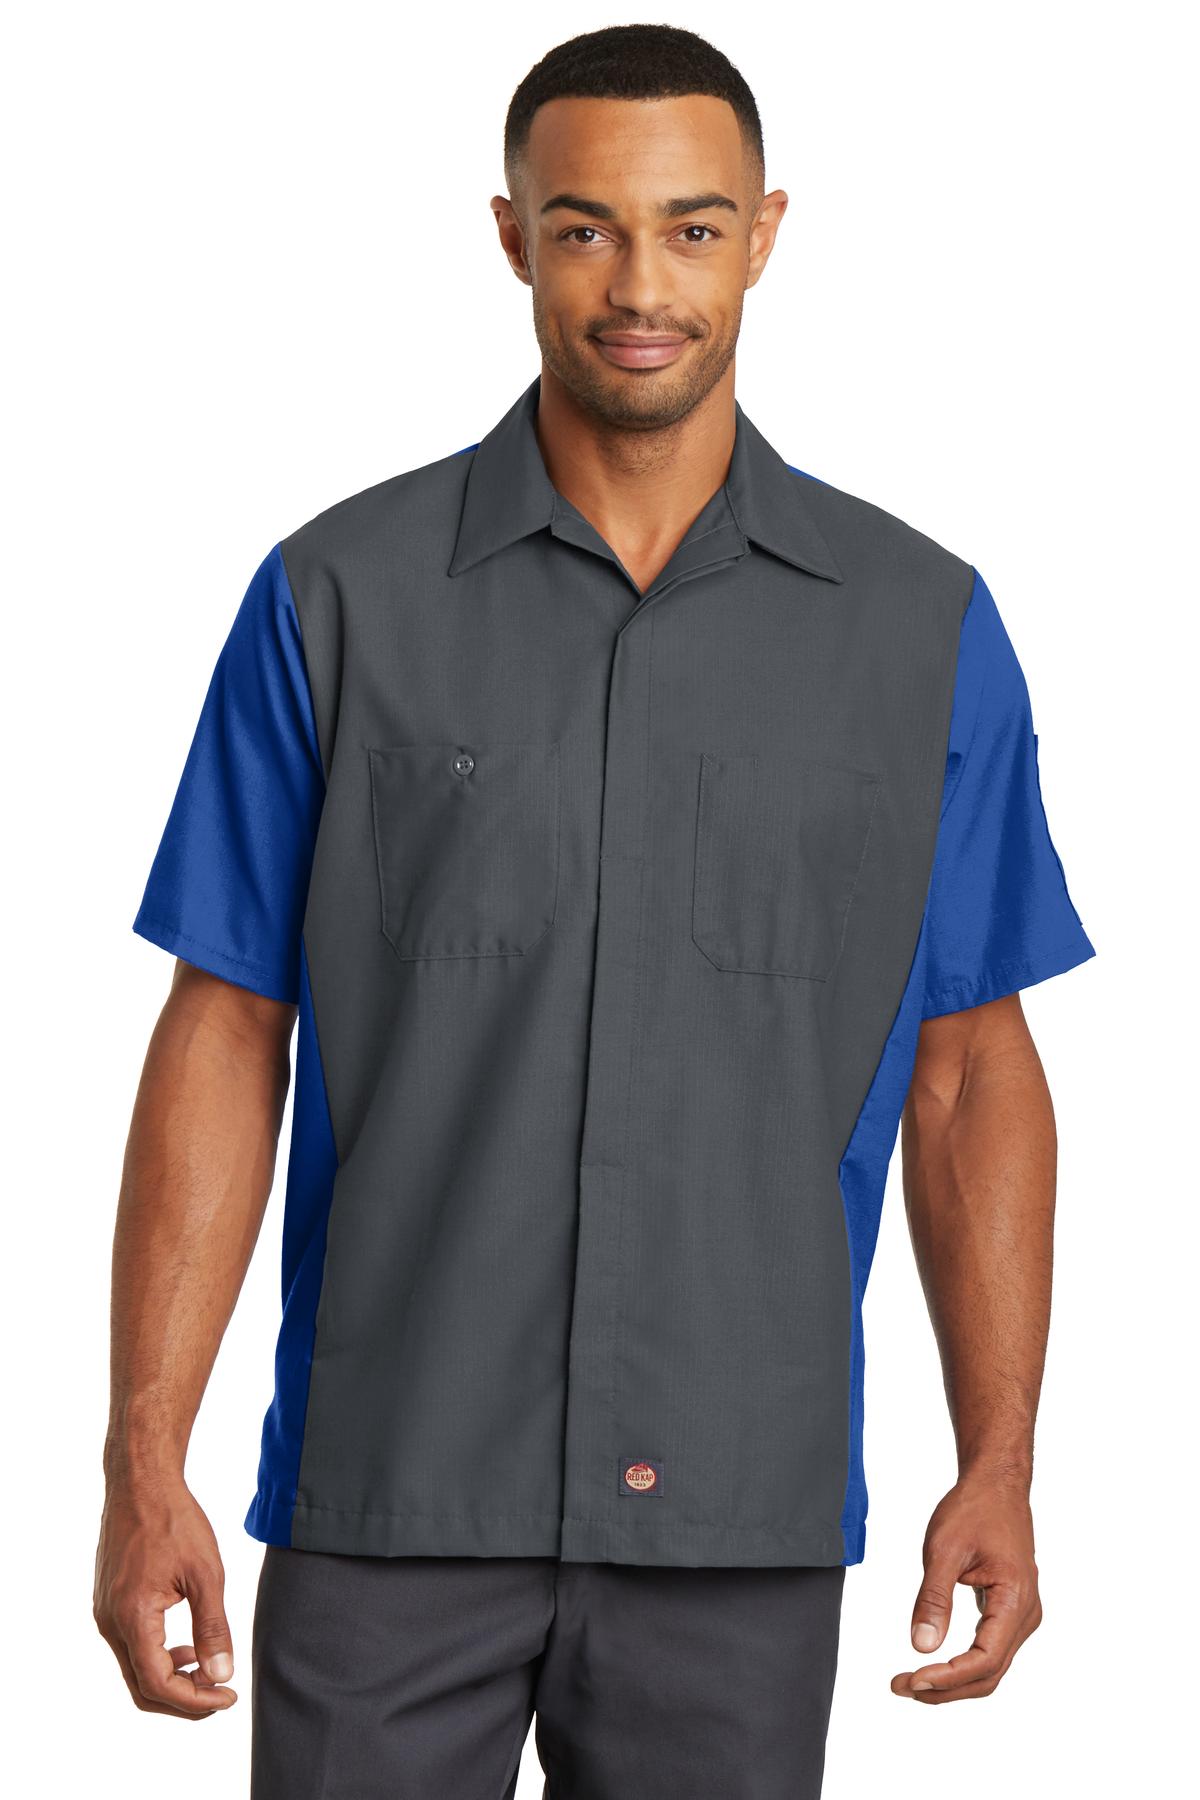 Red Kap Industrial Workwear&Woven Shirts ® Short Sleeve Ripstop Crew Shirt.-Red Kap